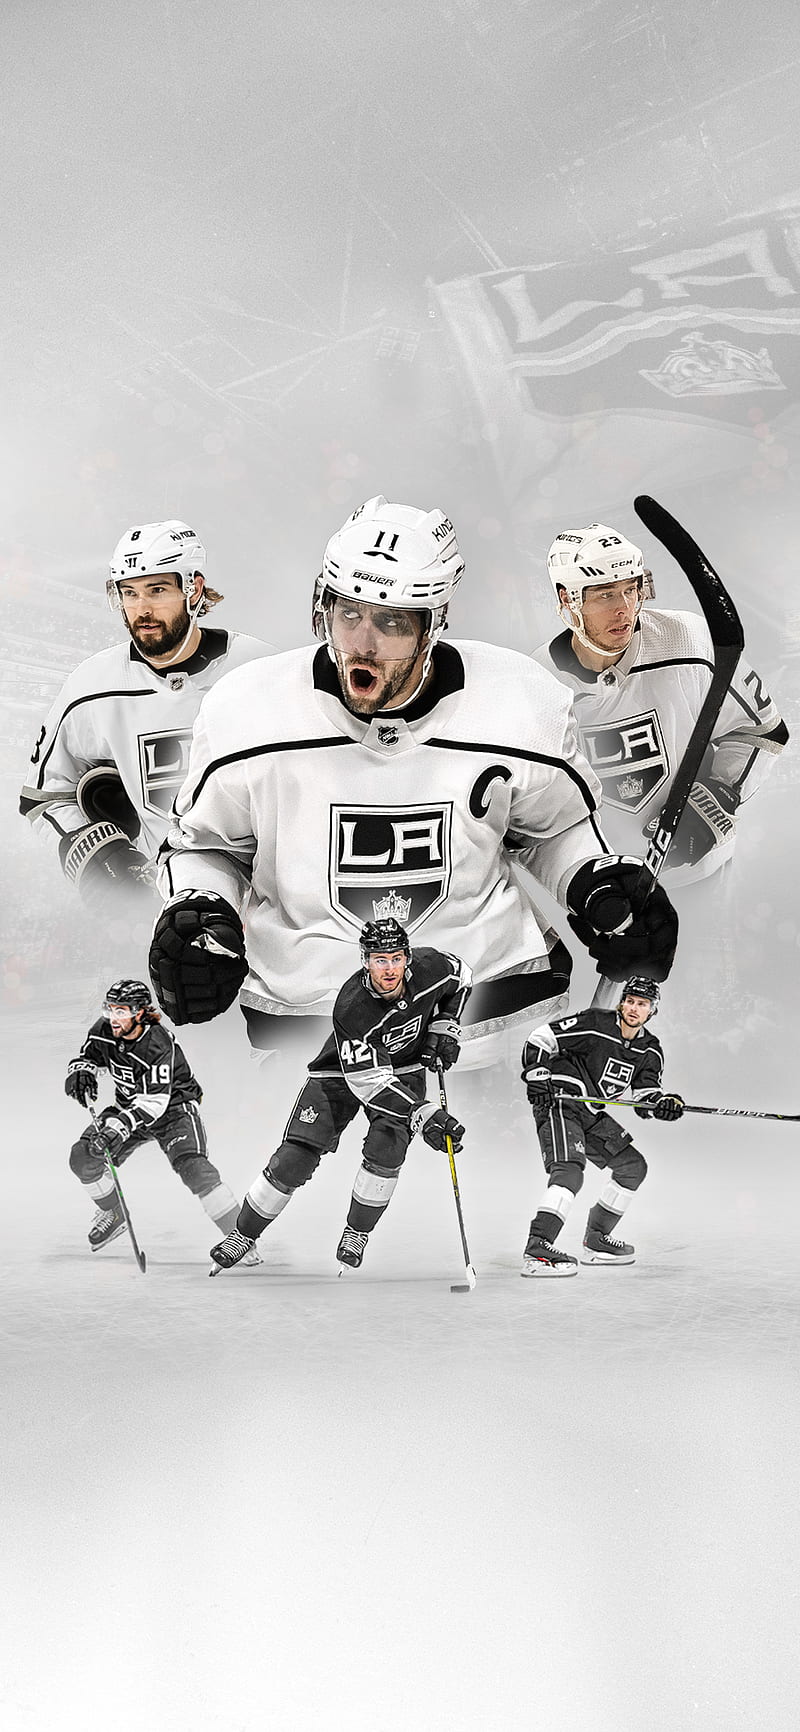 Los Angeles Kings (NHL) iPhone X/XS/XR Lock Screen Wallpaper